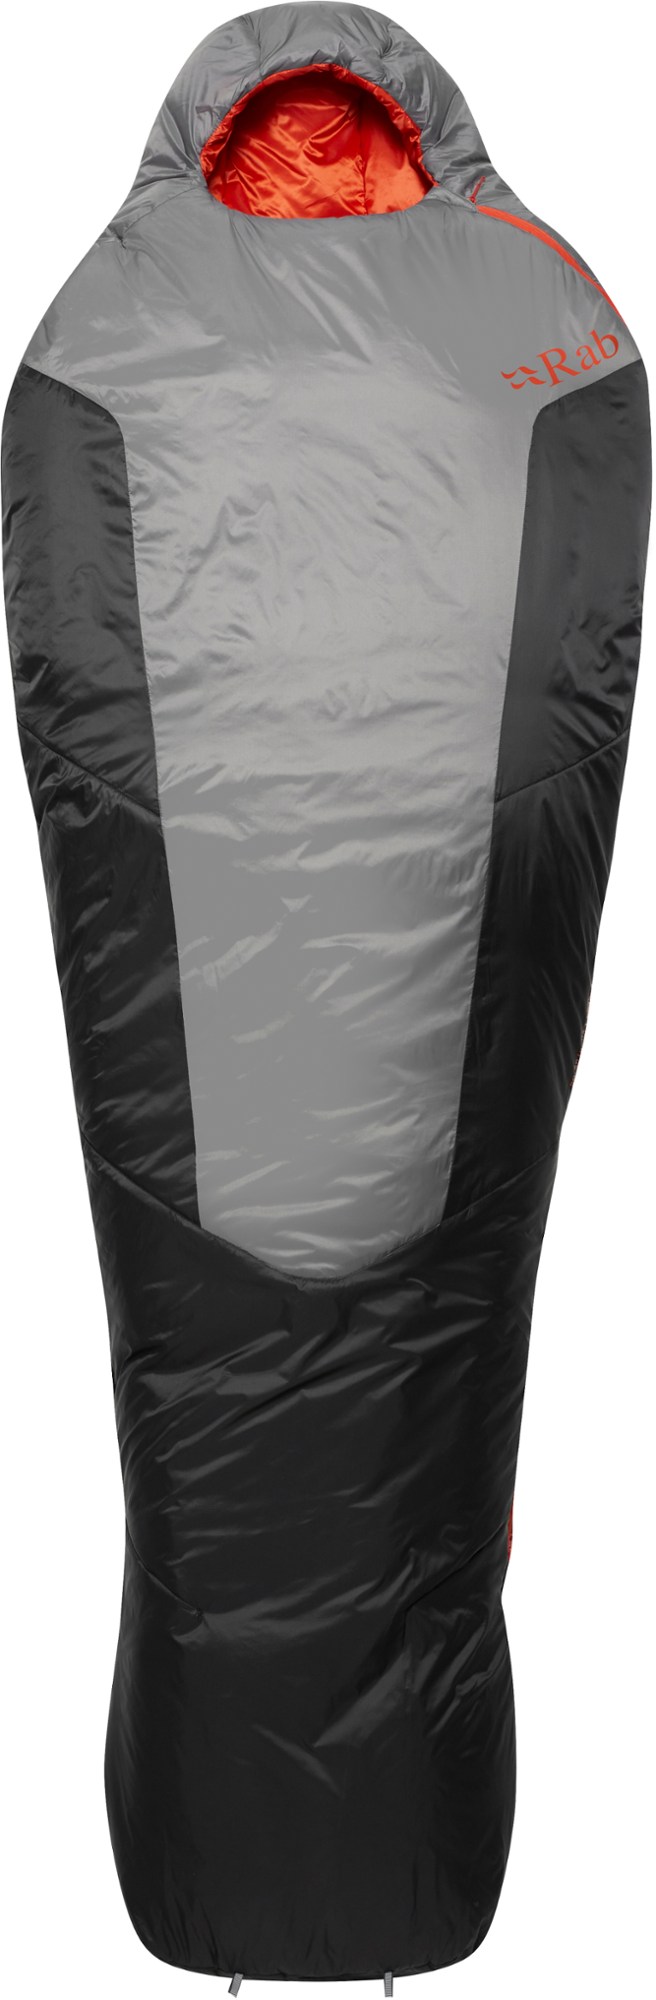 цена Спальный мешок Solar Ultra 1 Rab, серый